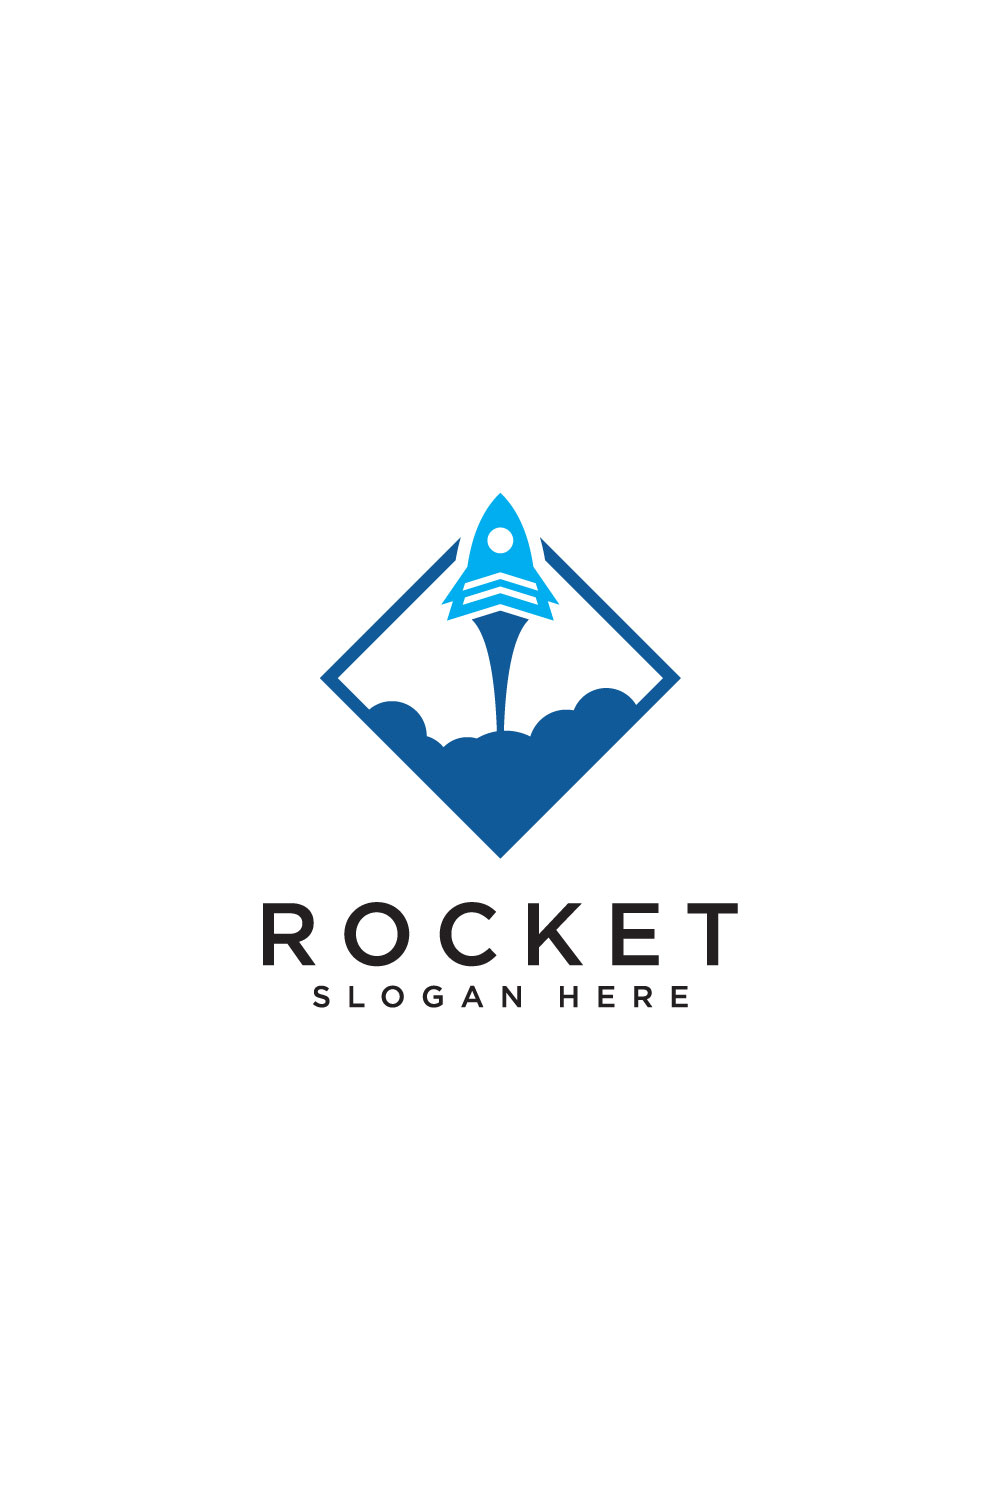 rocket launch logo vector design pinterest preview image.